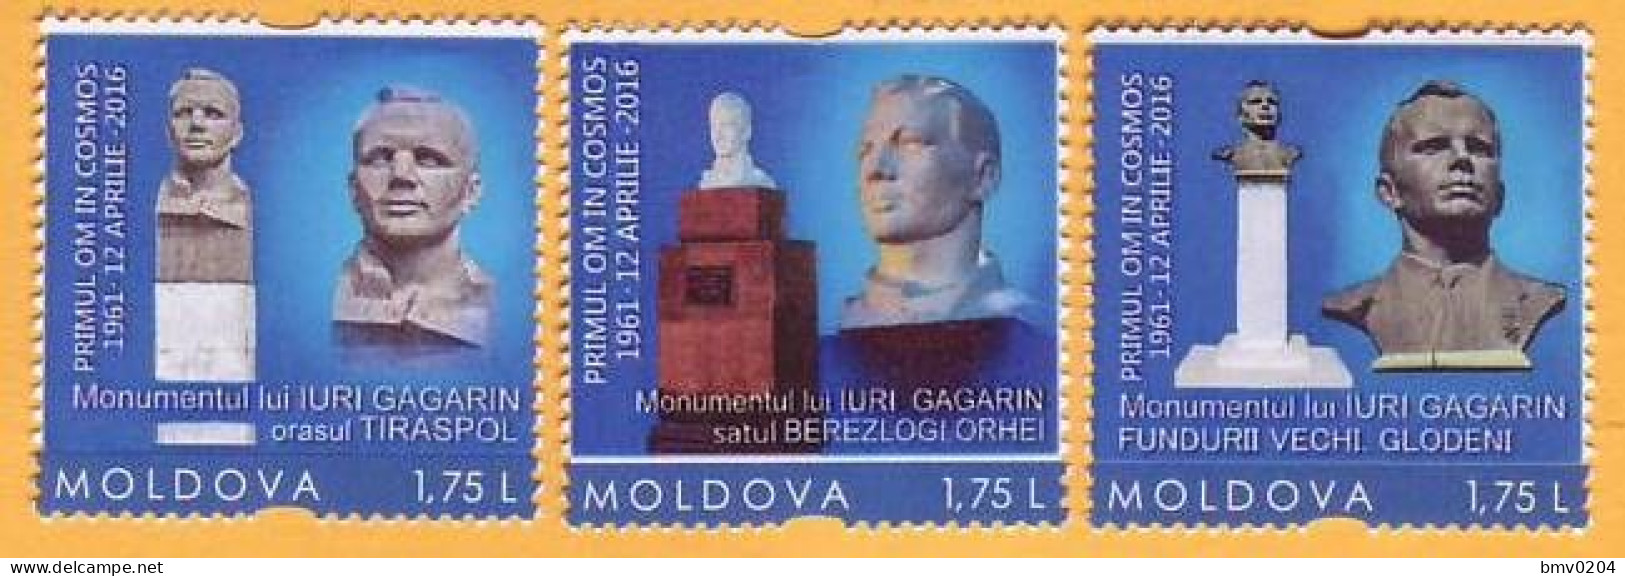 2016 Moldova Moldavie Moldau  Russia  Yuri Gagarin. Personalized Stamps. Space. Monument To Gagarin 3v Mint. - Moldawien (Moldau)